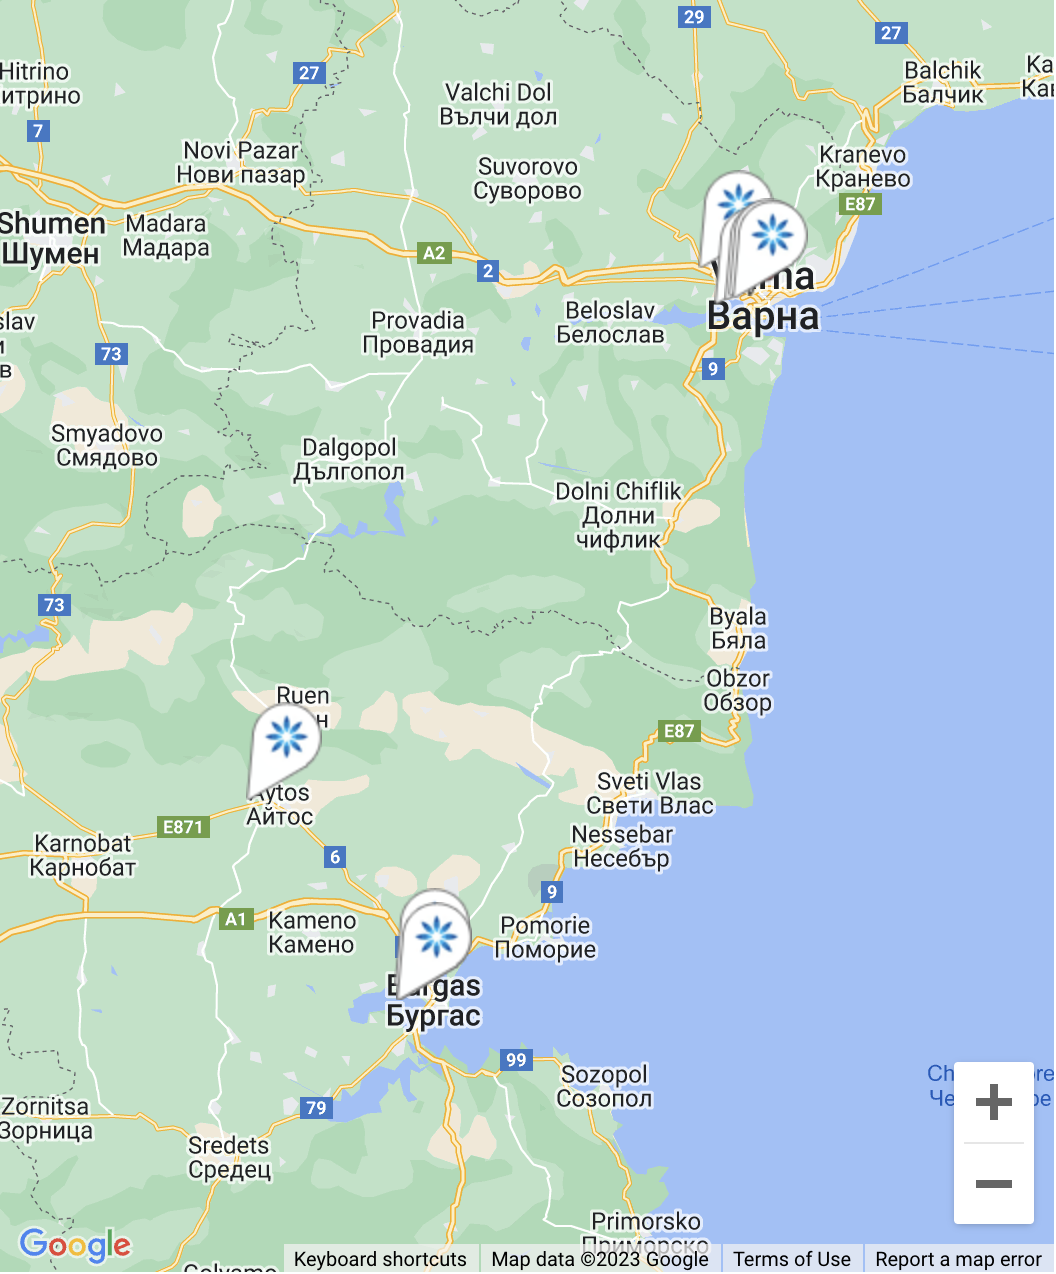 Find an Invisalign provider in Varna 